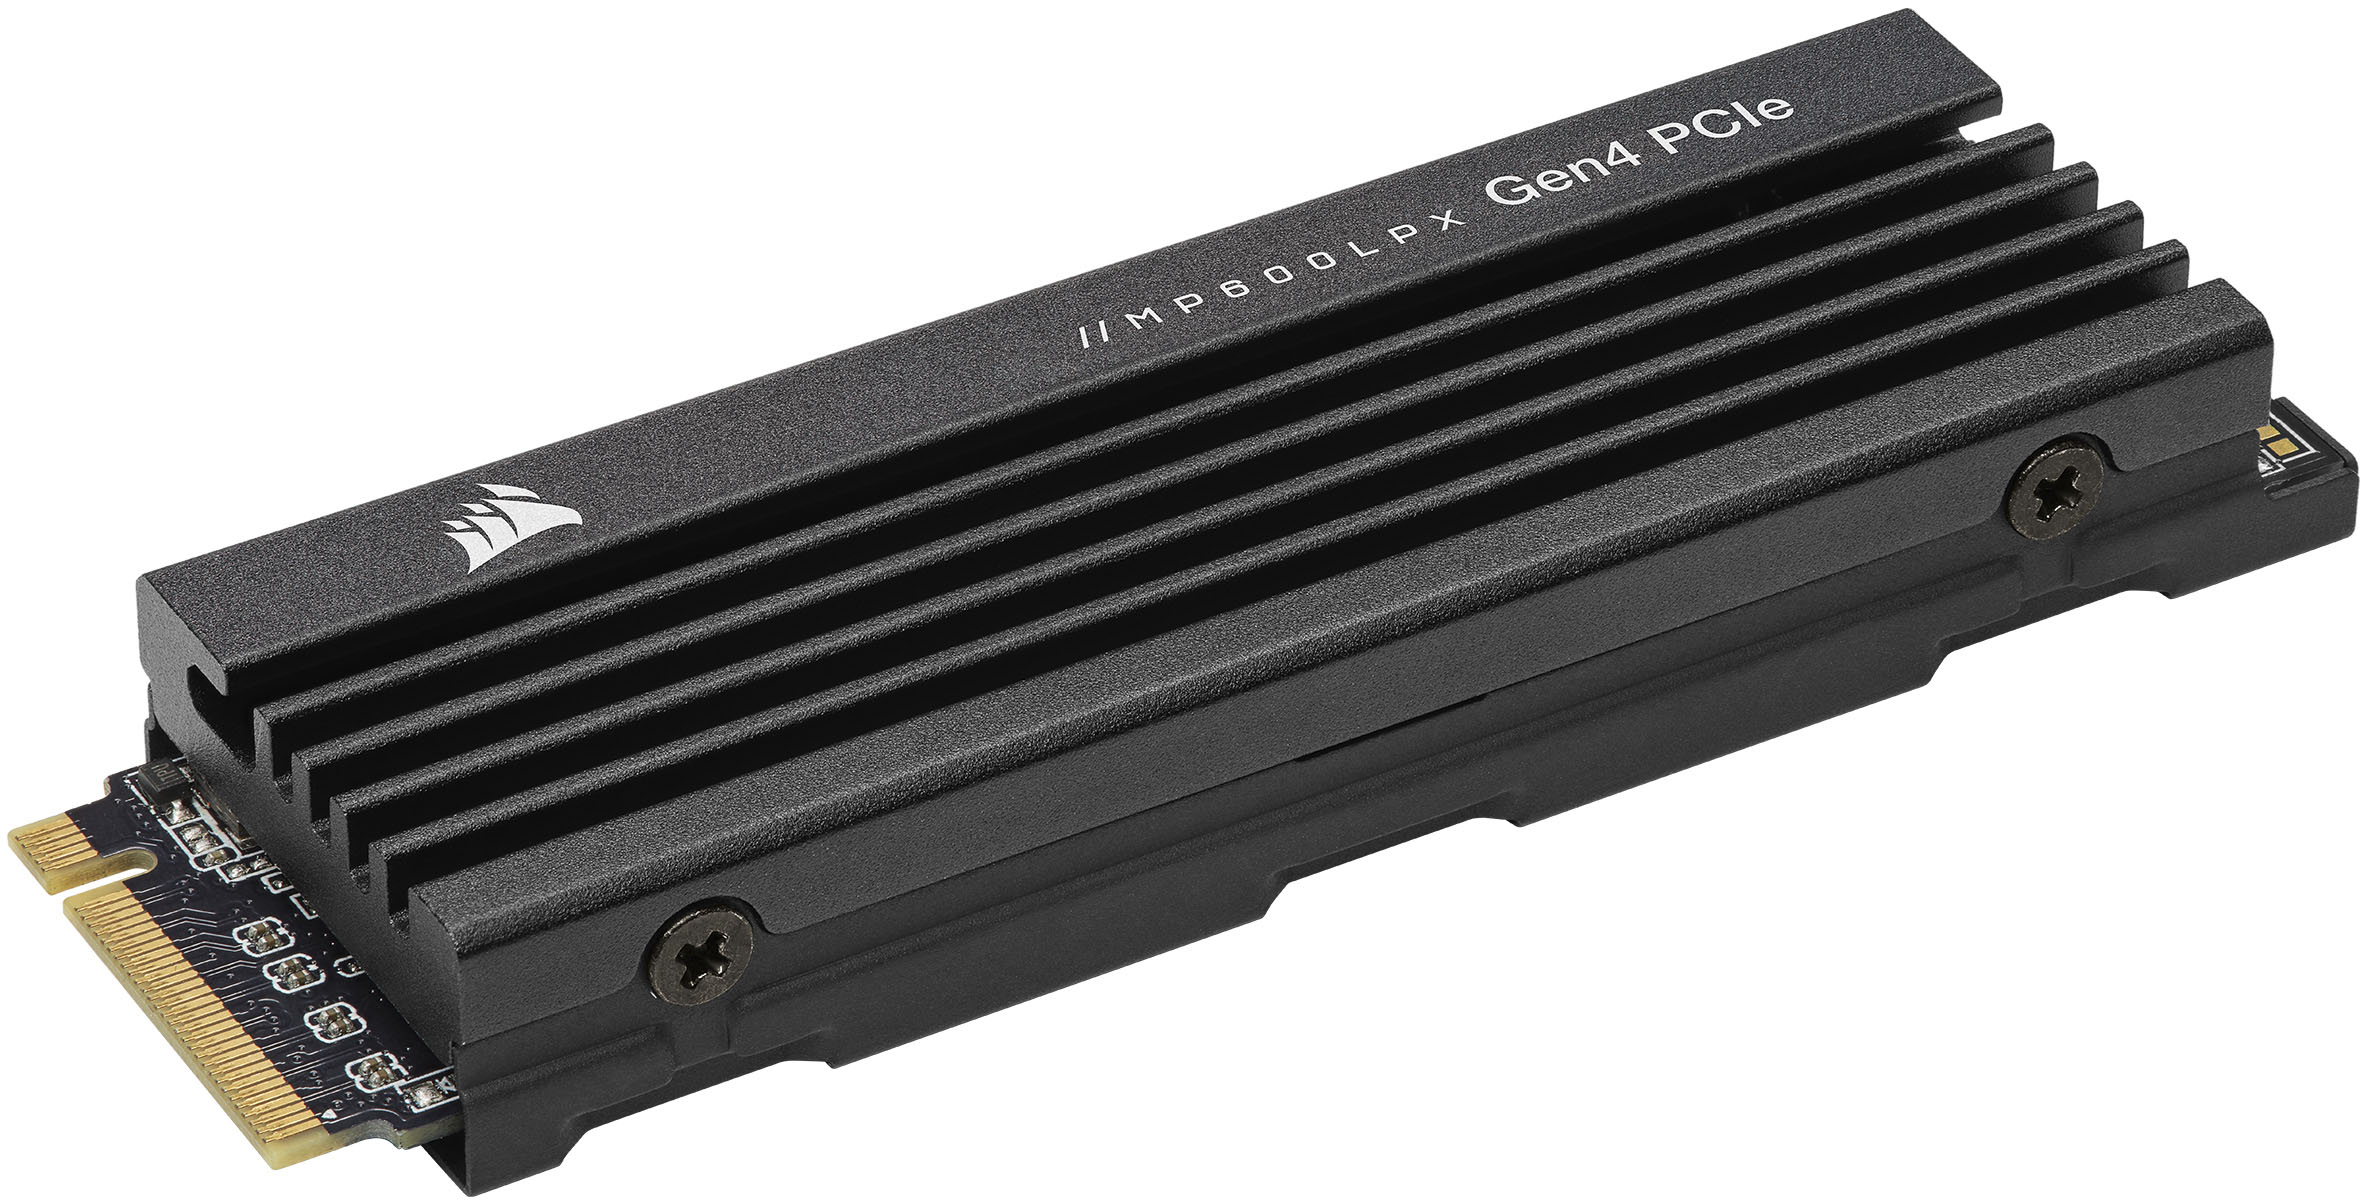 CORSAIR - MP600 PRO LPX 1TB Internal SSD PCIe Gen 4 x4 NVMe M.2 with  Heatsink for PS5 and Desktops